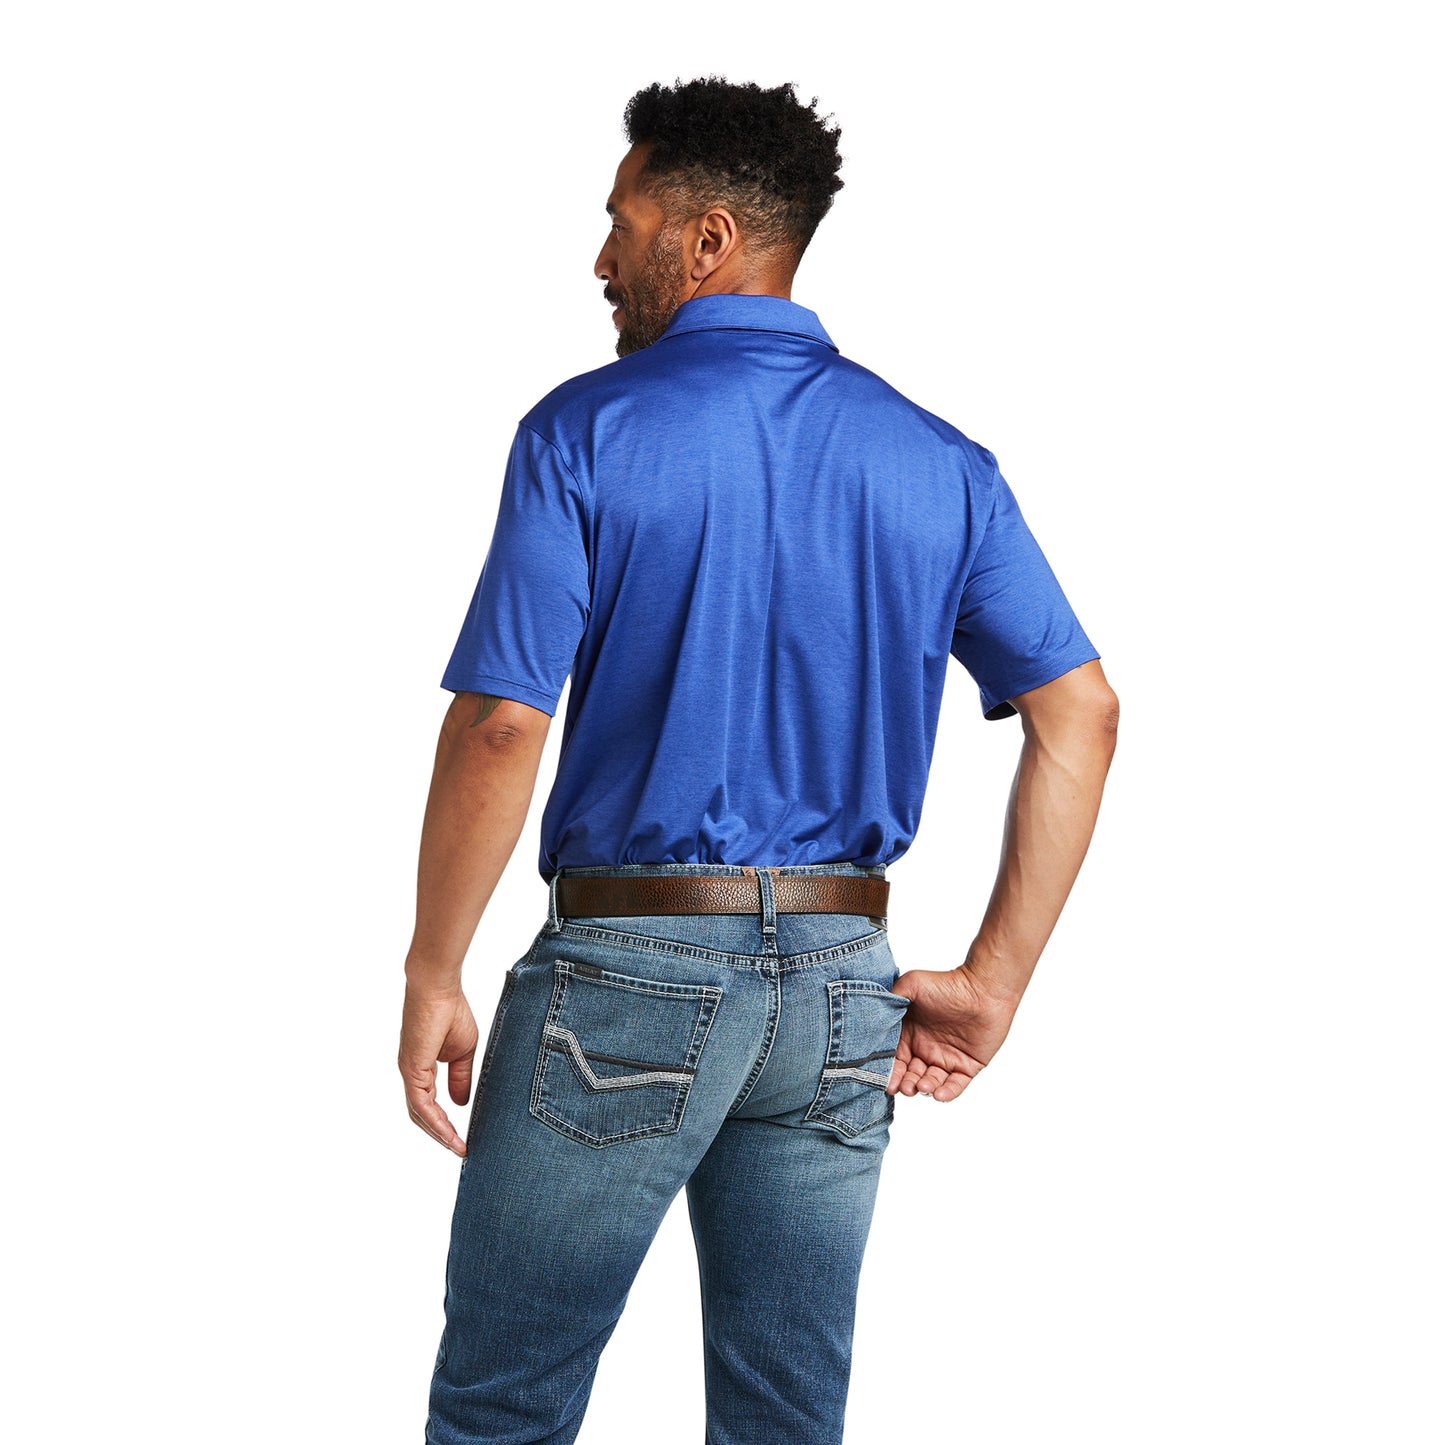 Ariat® Men's Charger 2.0 Venus Blue Short Sleeve Polo Shirt 10039414